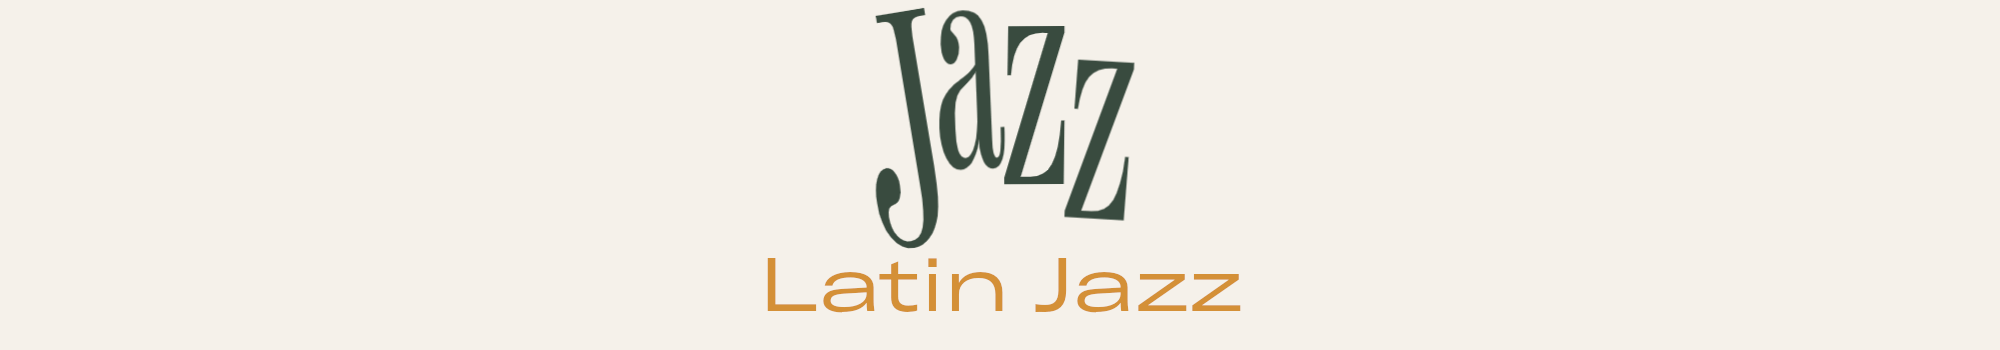 Rubrik till kategori: Jazz - Latin